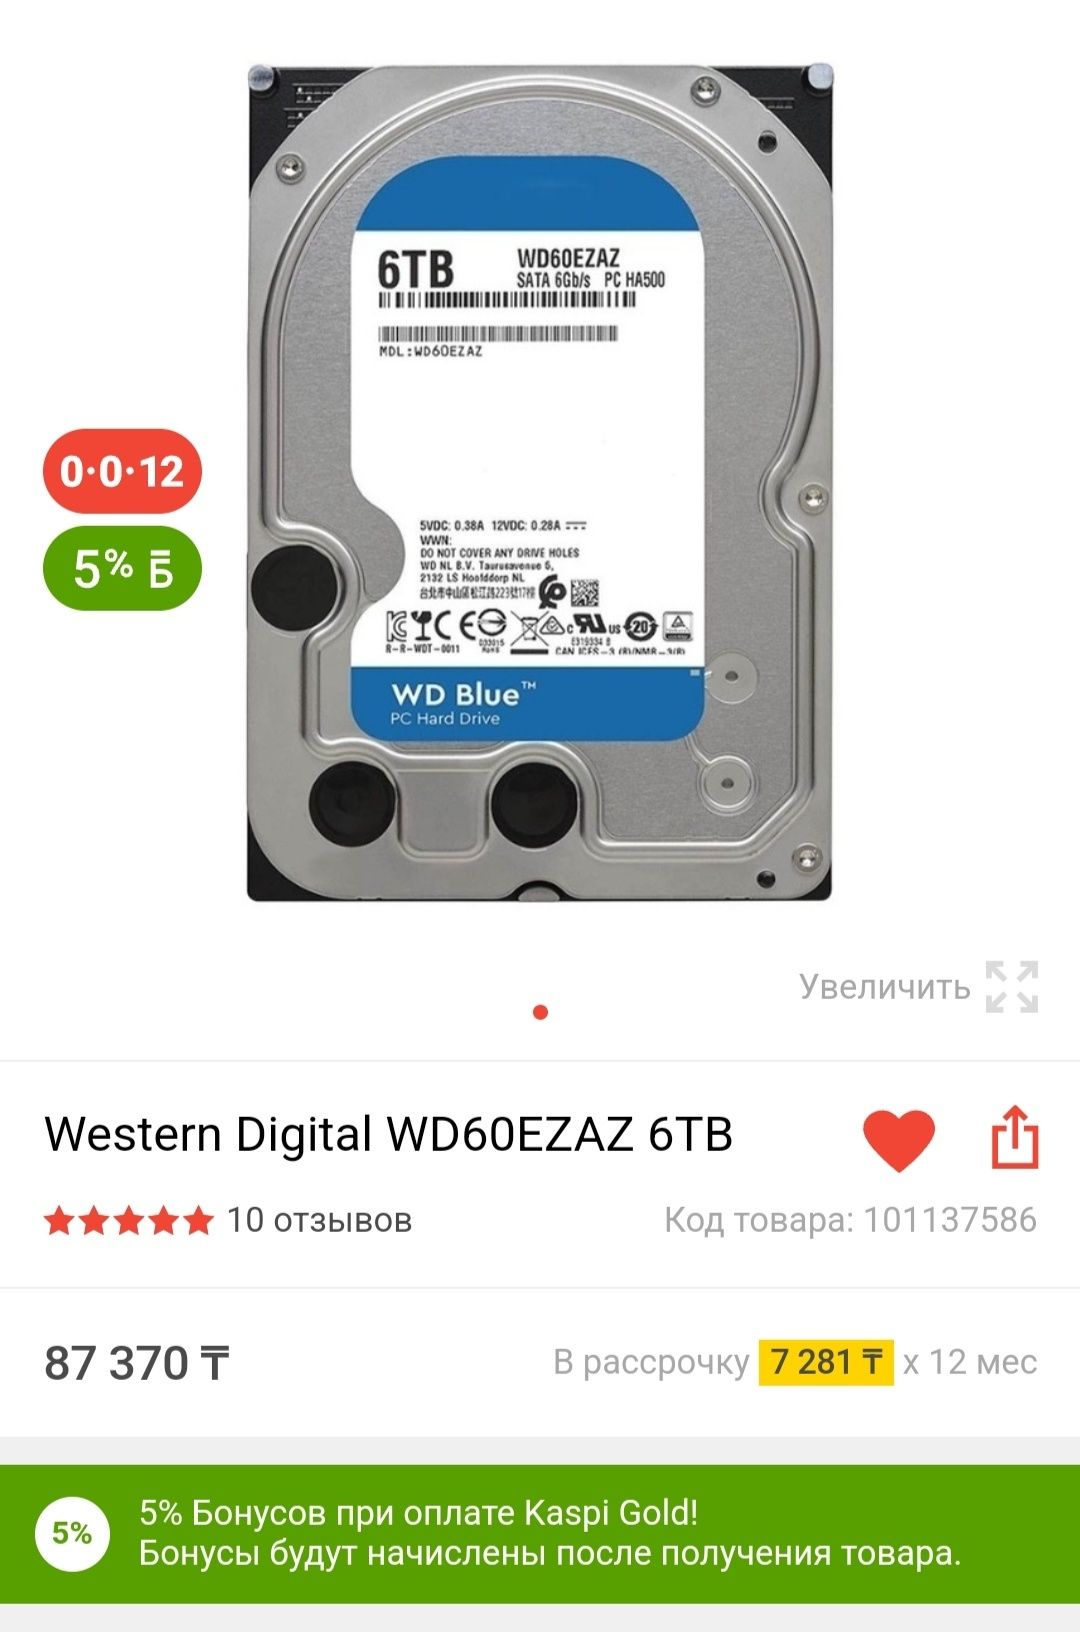 Western Digital WD60EZAZ 6TB жесткие диски